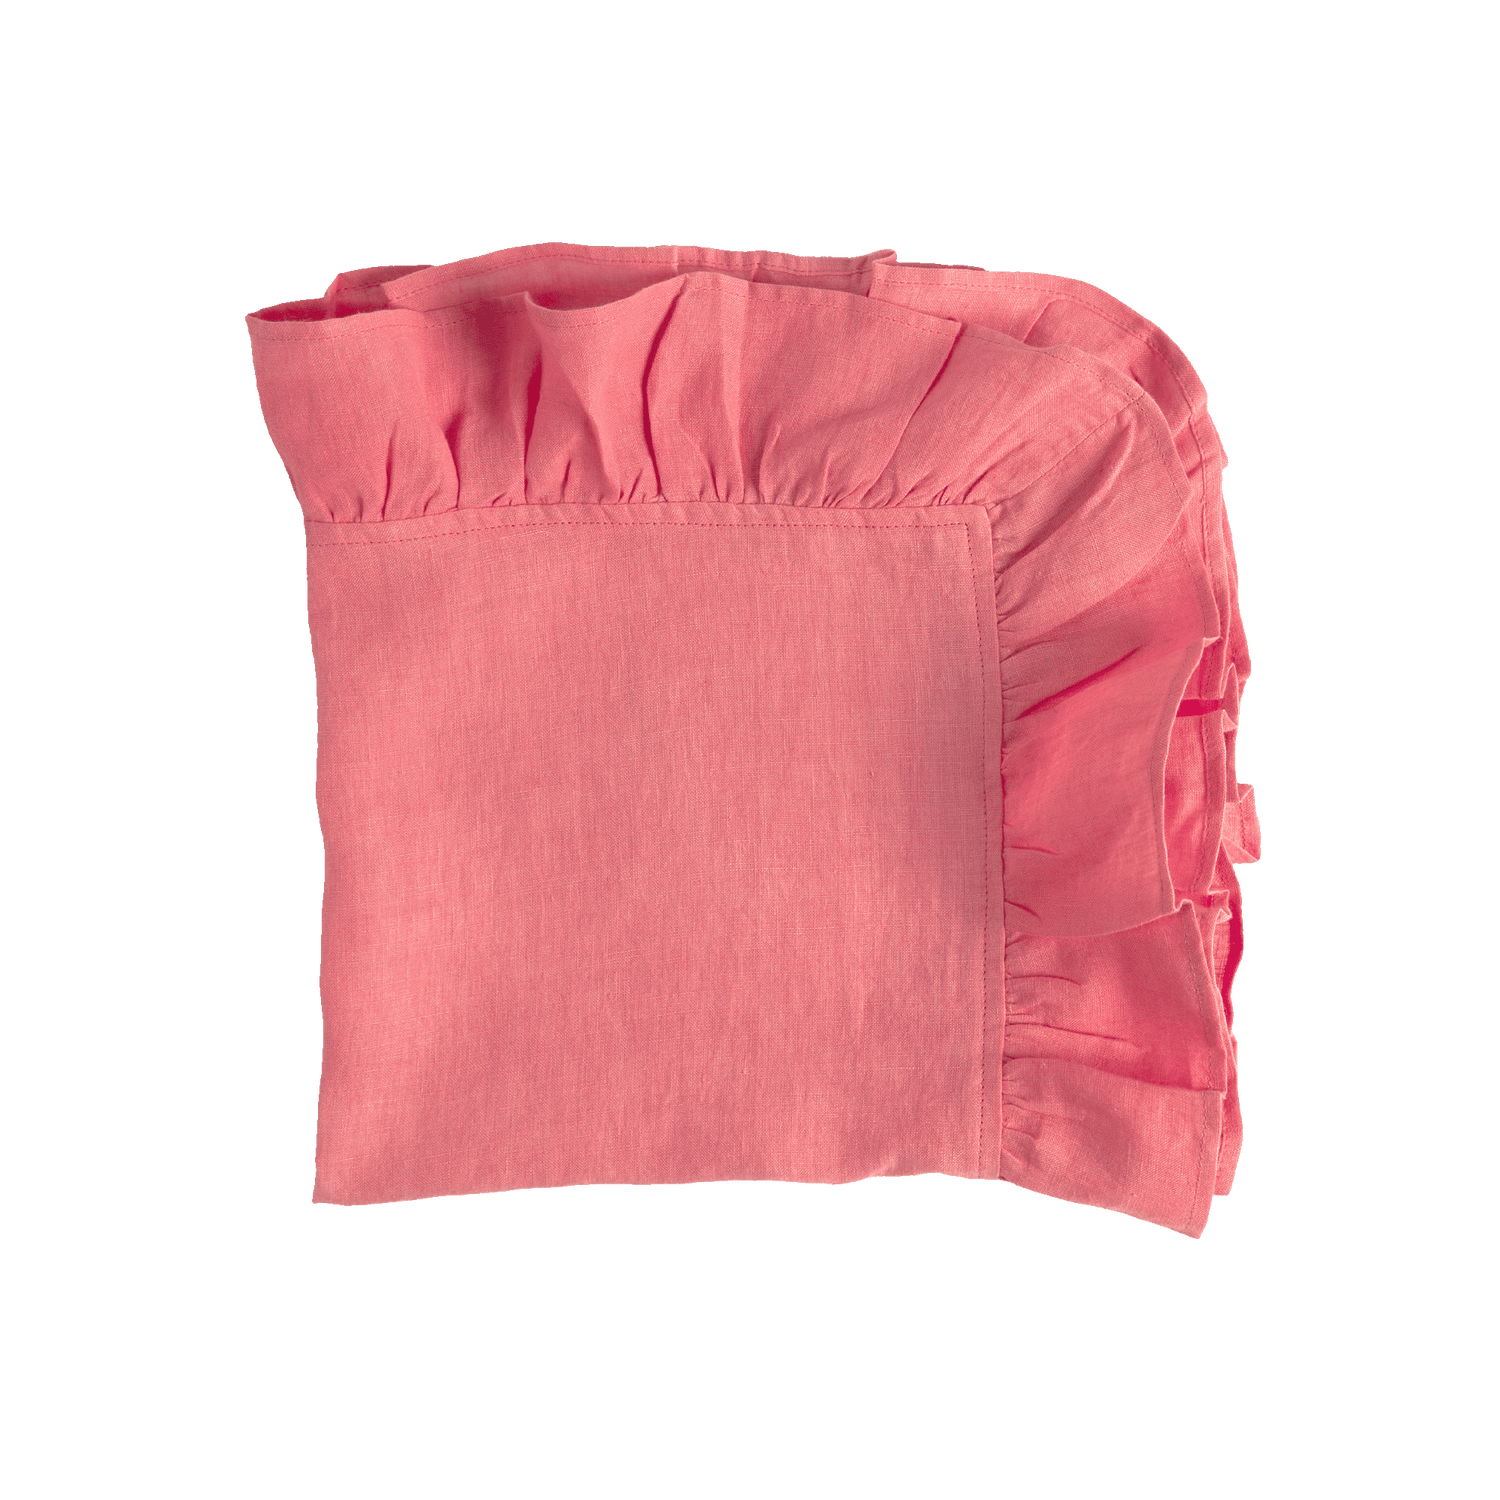 Bell napkin - Pink 45x45 cm